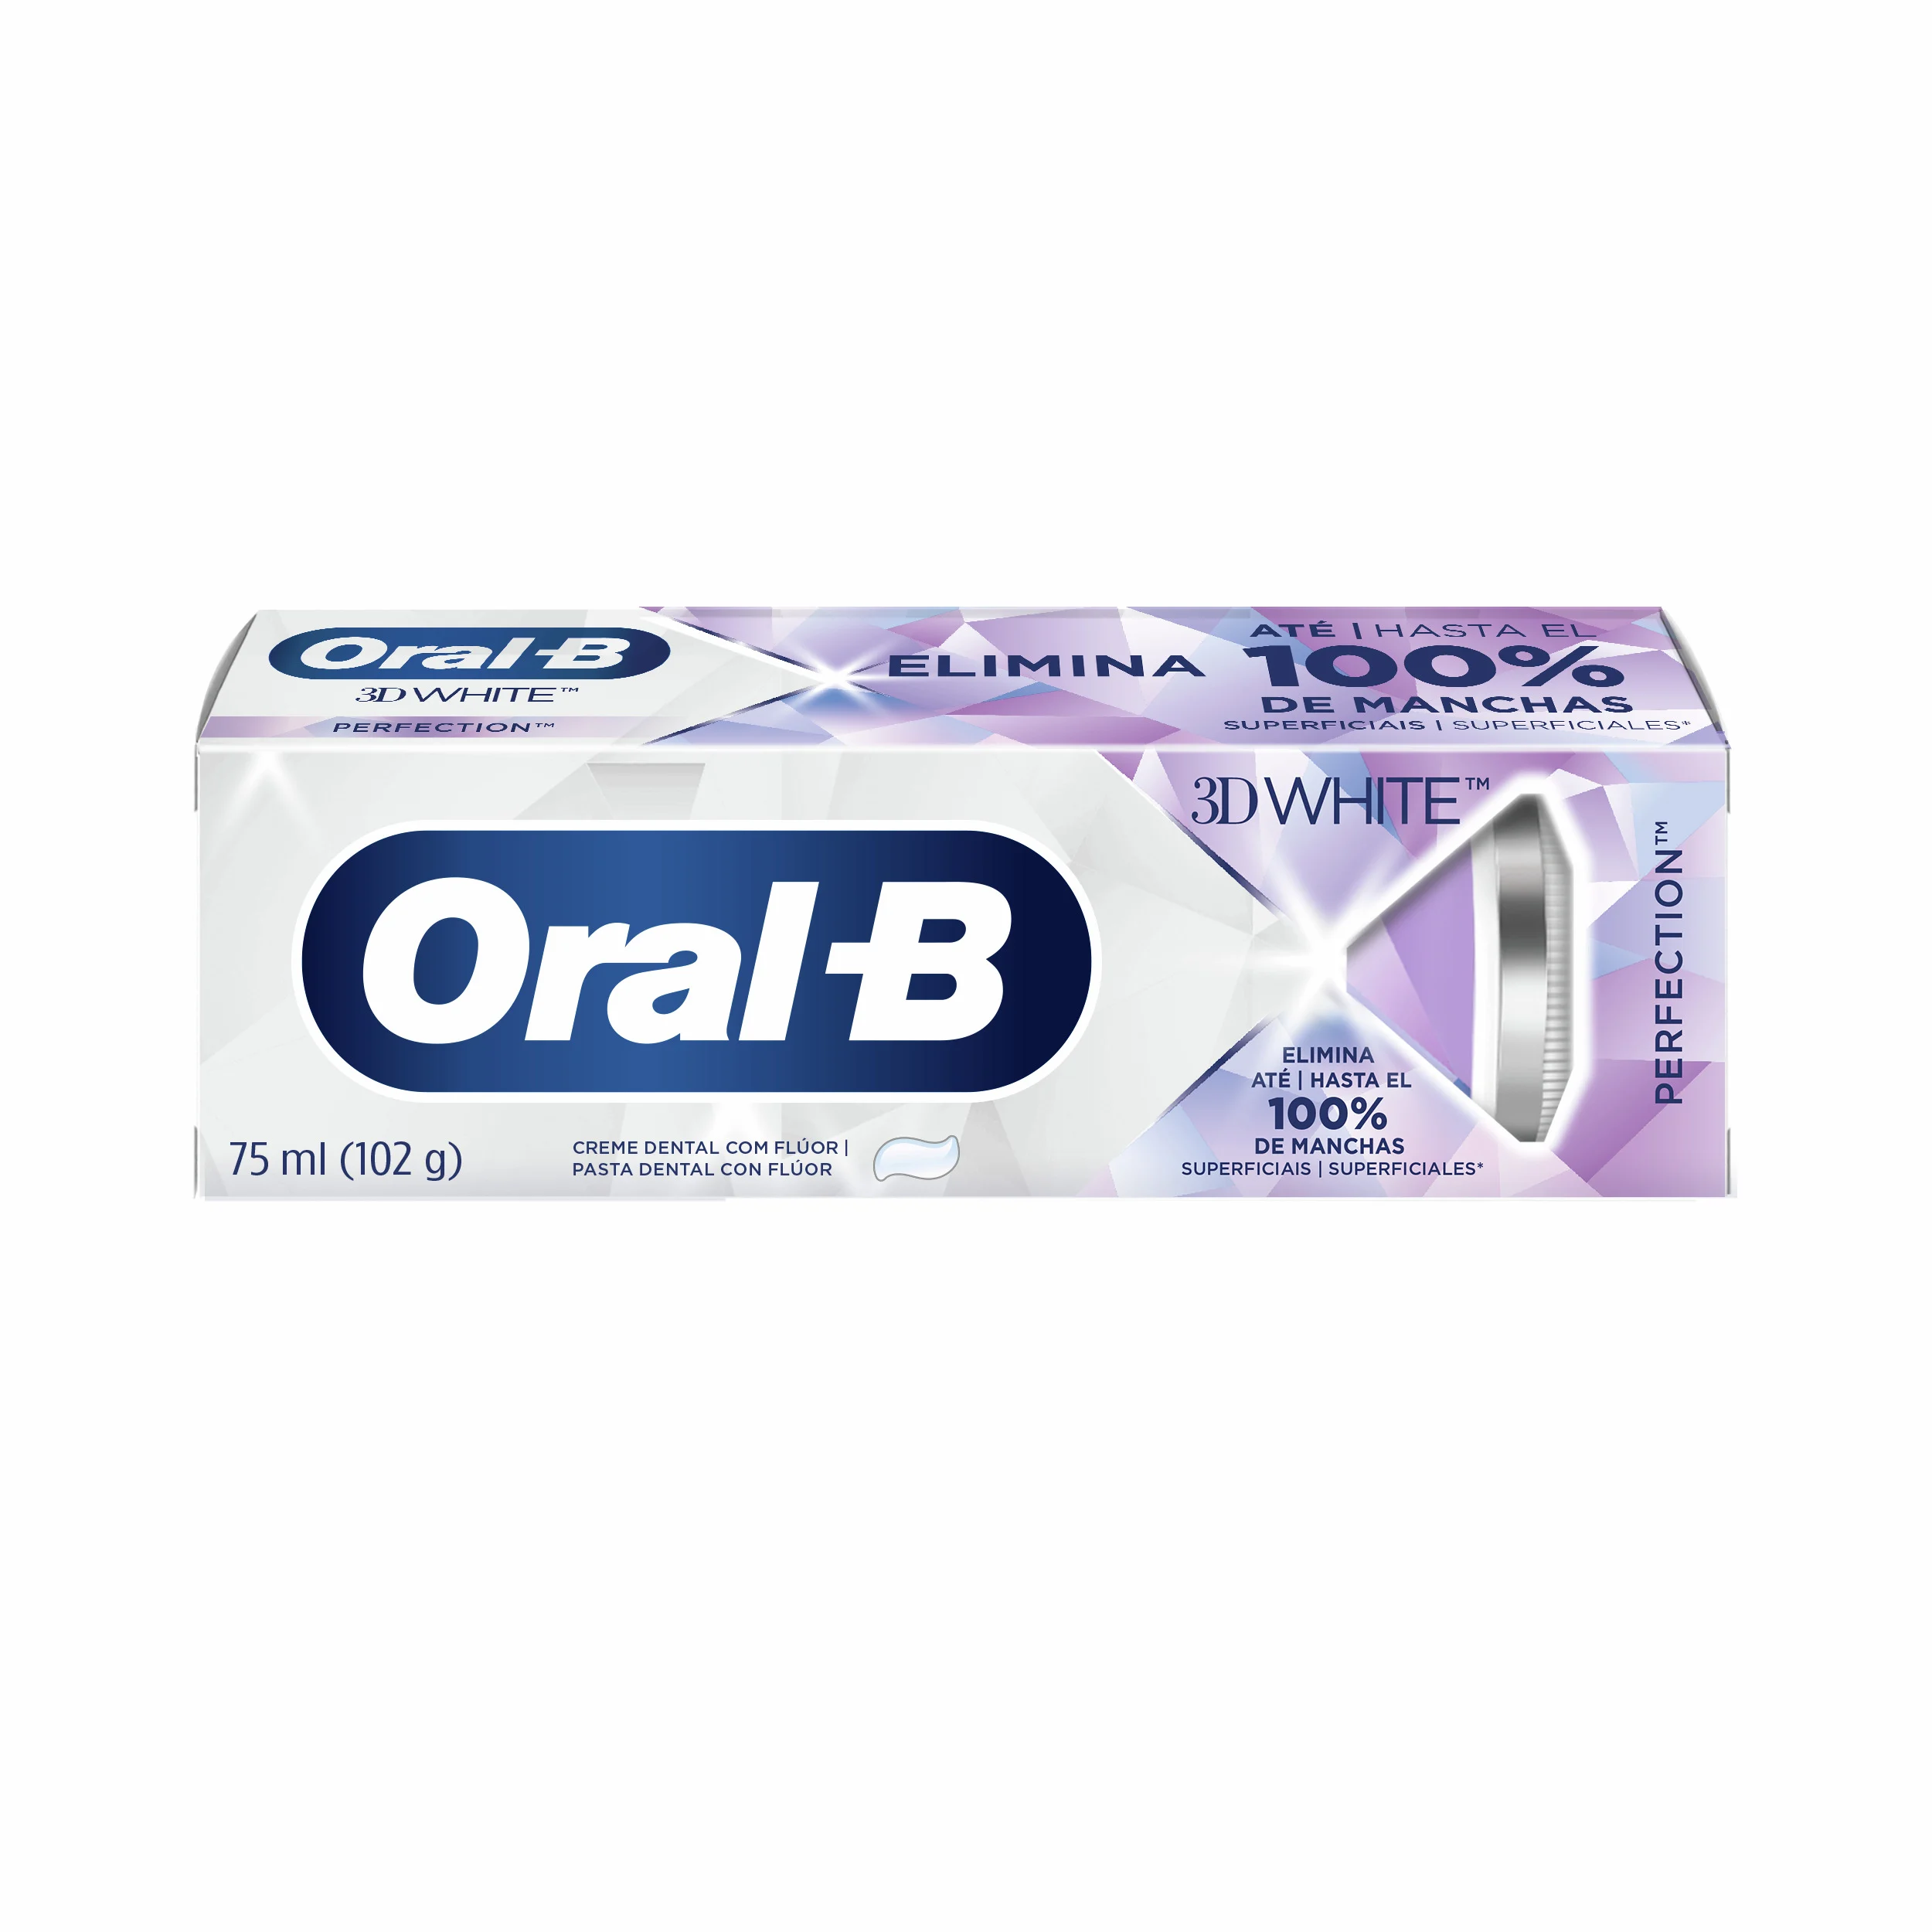 Superioridad tos marioneta Pasta dental Oral-B 3D White Perfection | Oral-B MX